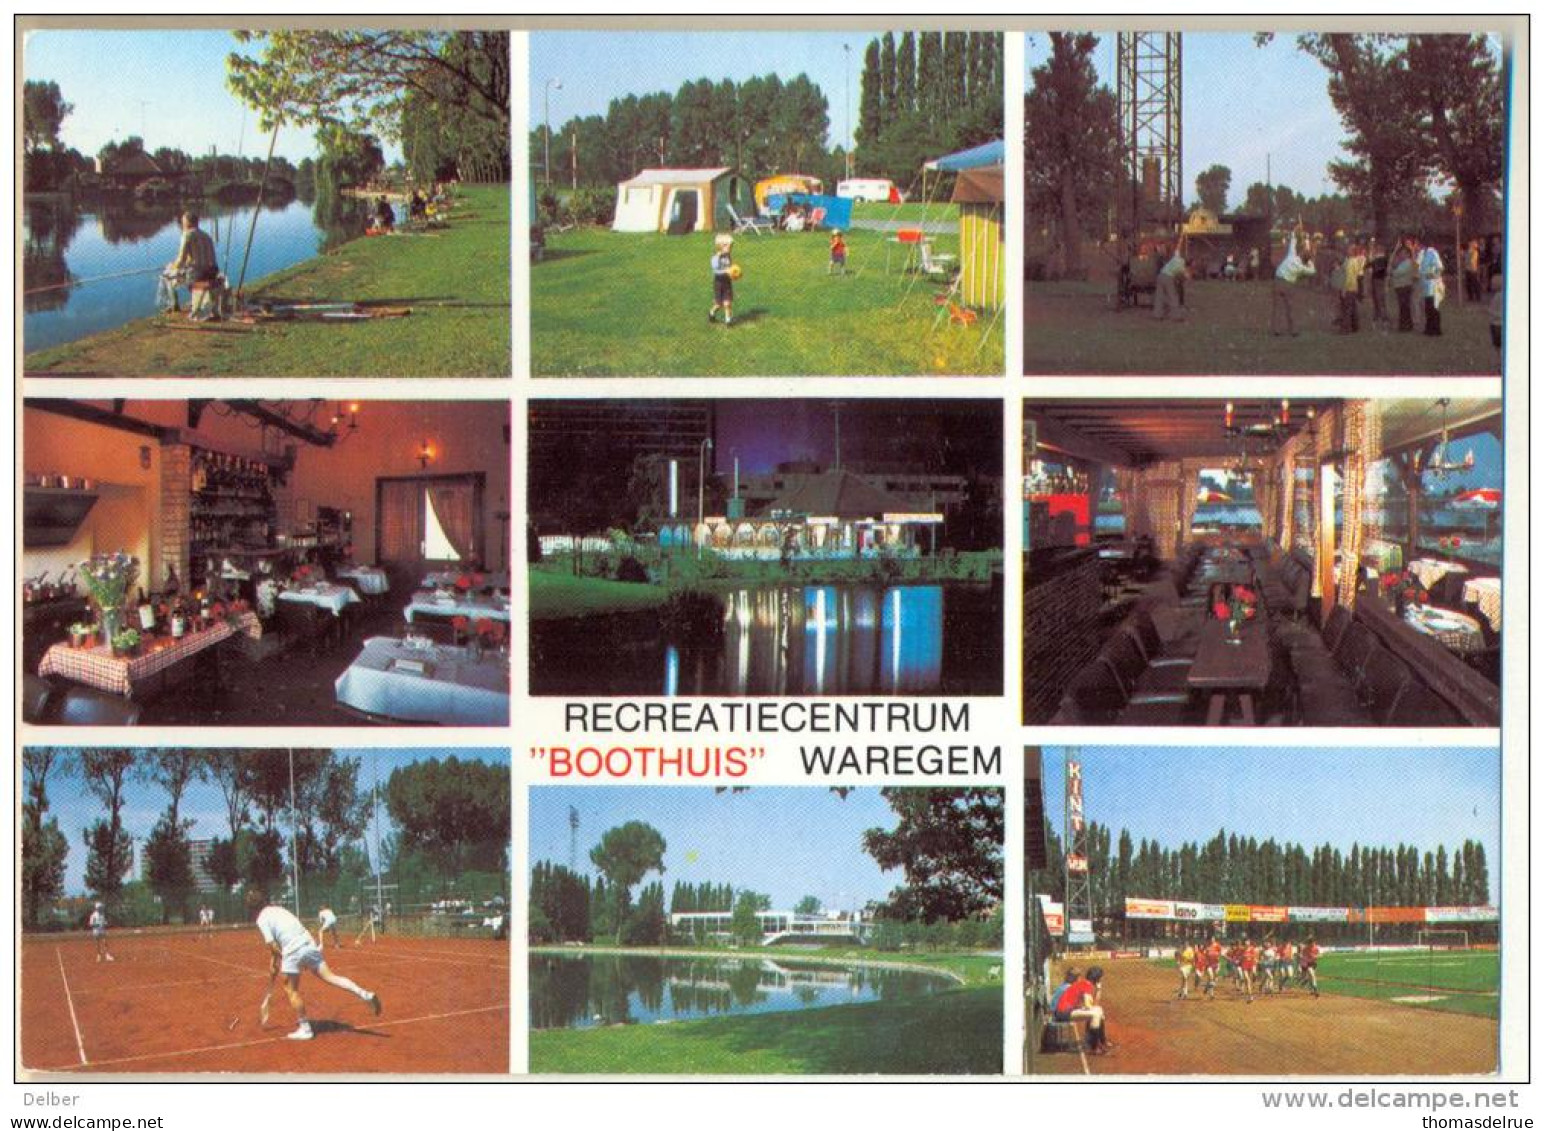 Pk203: Recreatiecentrum"BOOTHUIS"Waregem: Hengelen, Camping, Tennis, Sportstadium, Boogschieten,...atletiek... - Waregem